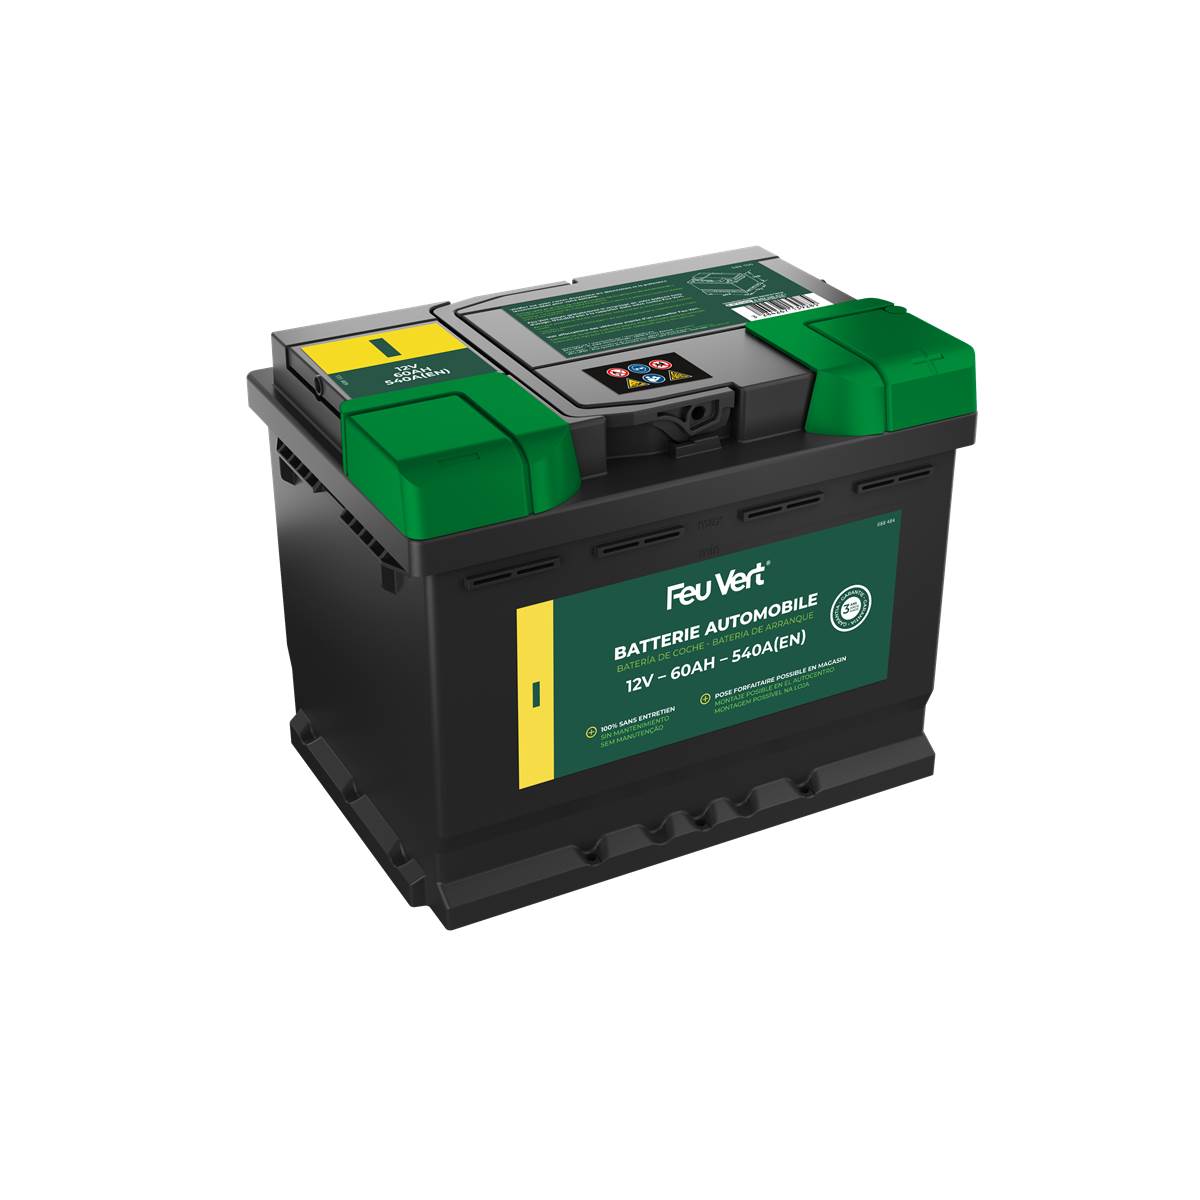 Batterie Voiture Feu Vert I - 60ah / 540a - 12v